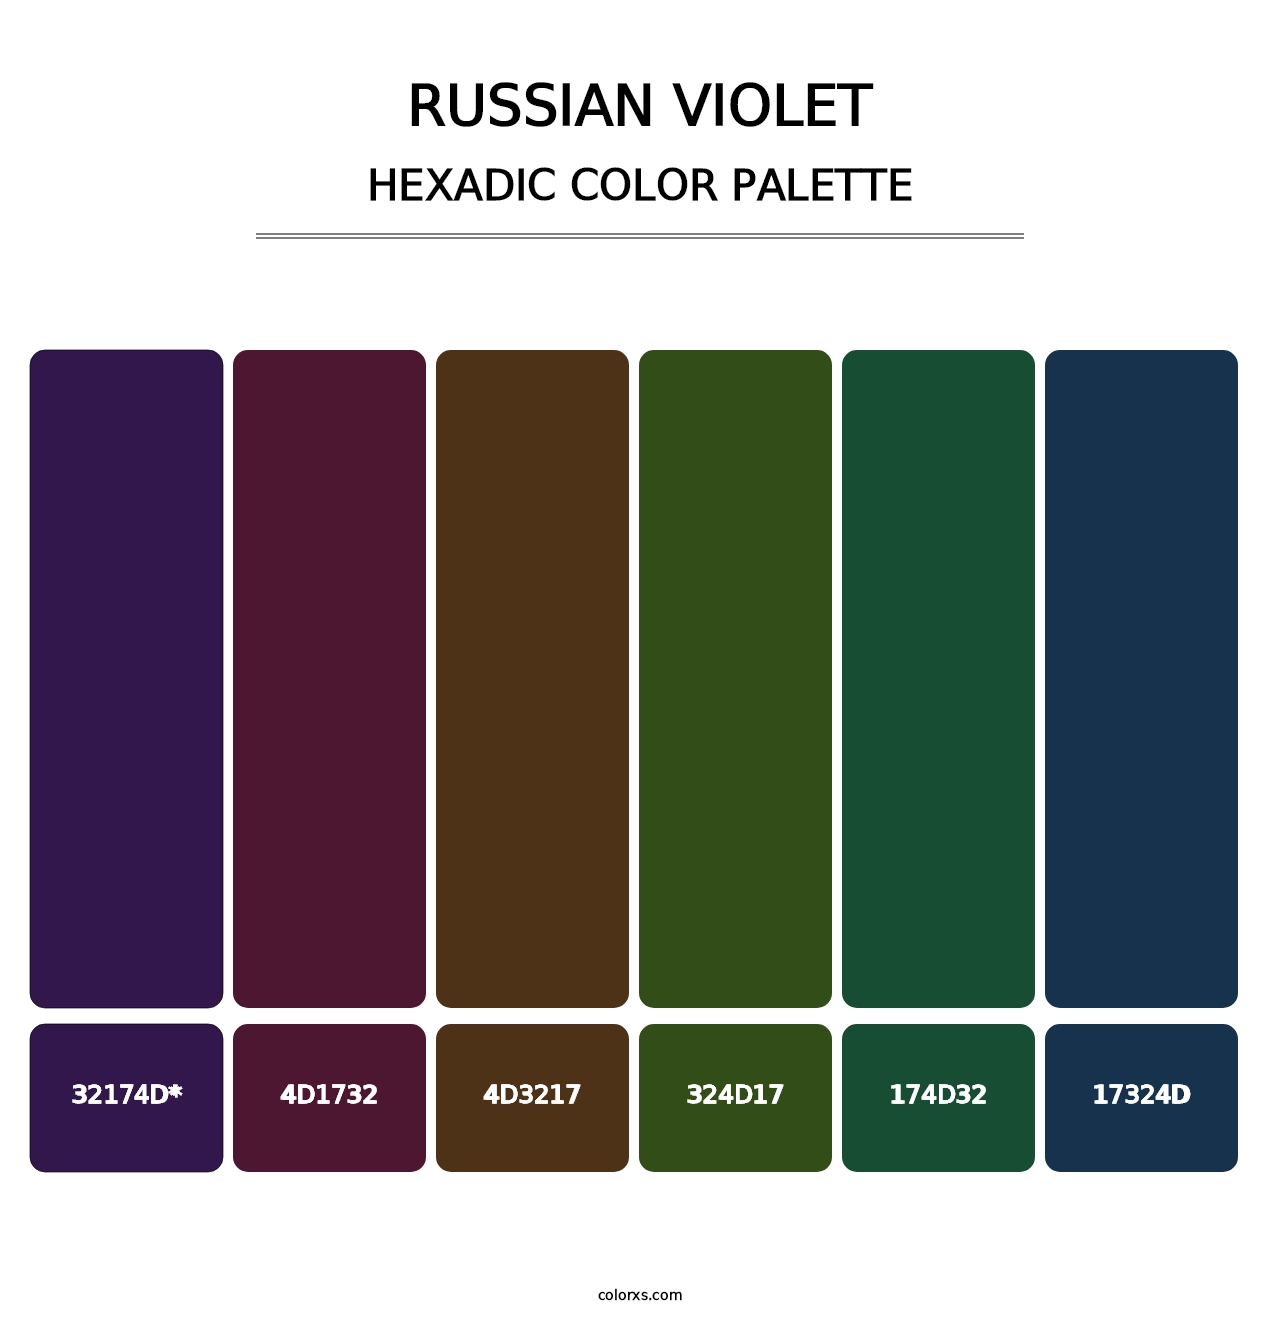 Russian Violet - Hexadic Color Palette